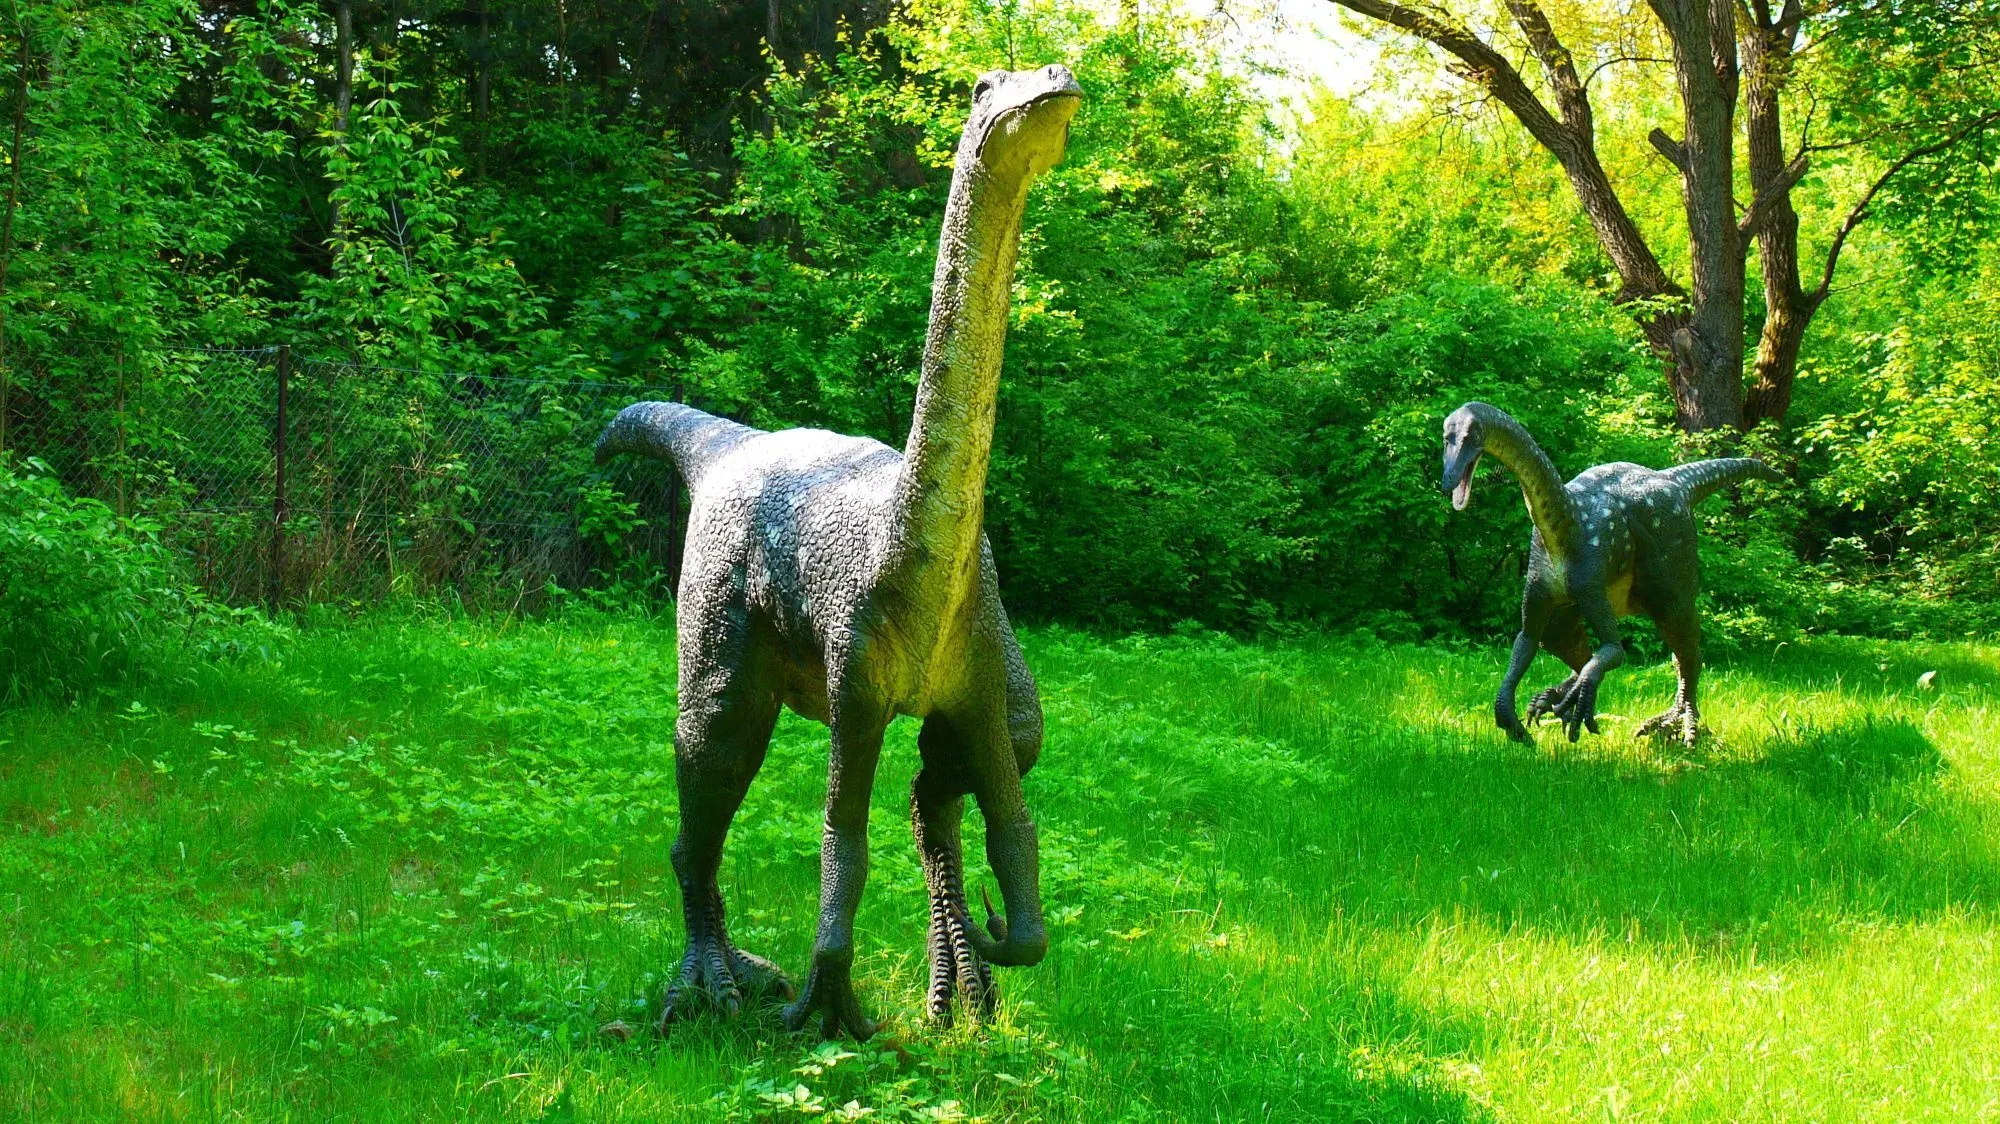 The Ornithomimus samueli specimen was discovered in Dinosaur Park Formation, Alberta.